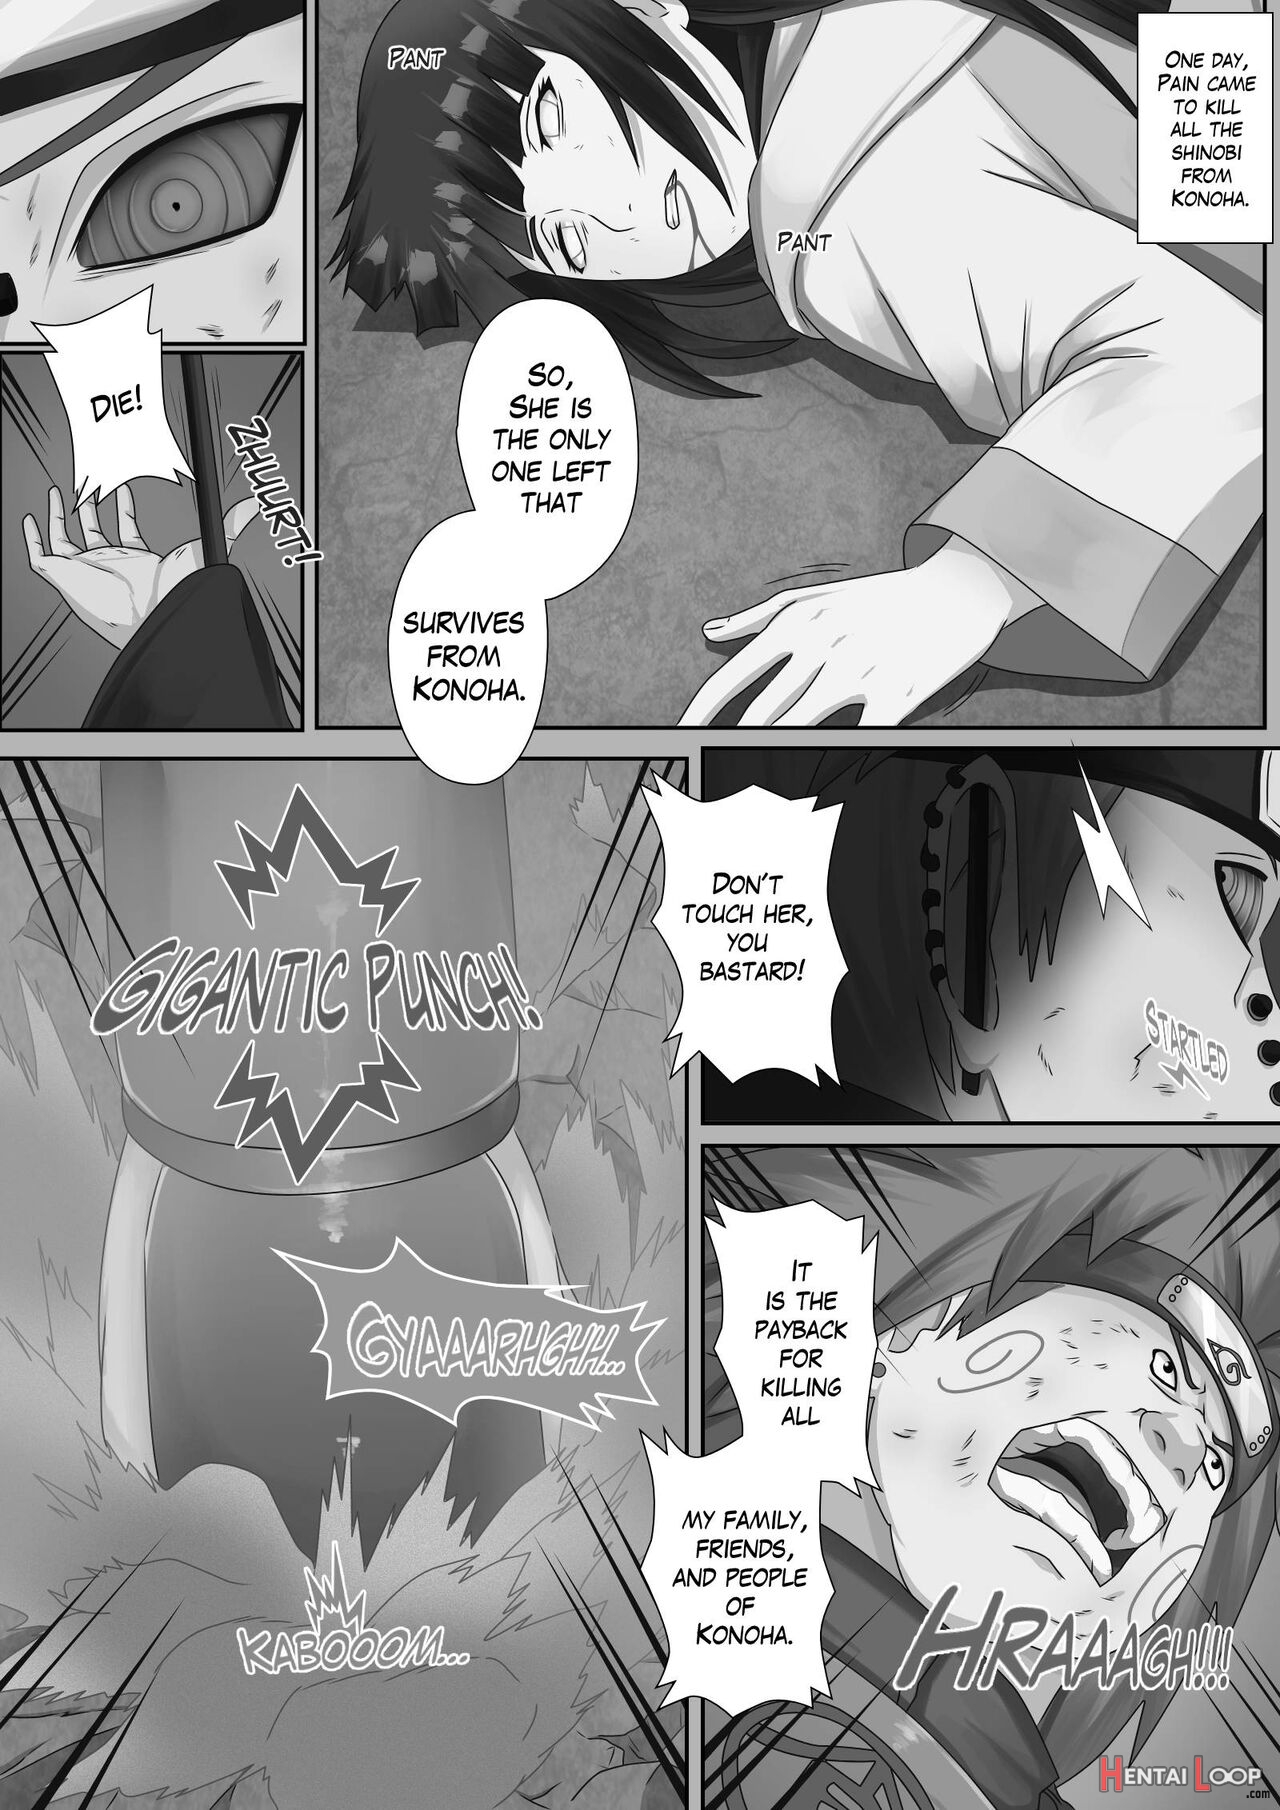 Hinata X Choji Mating Life After Konoha Gets Destroyed page 2